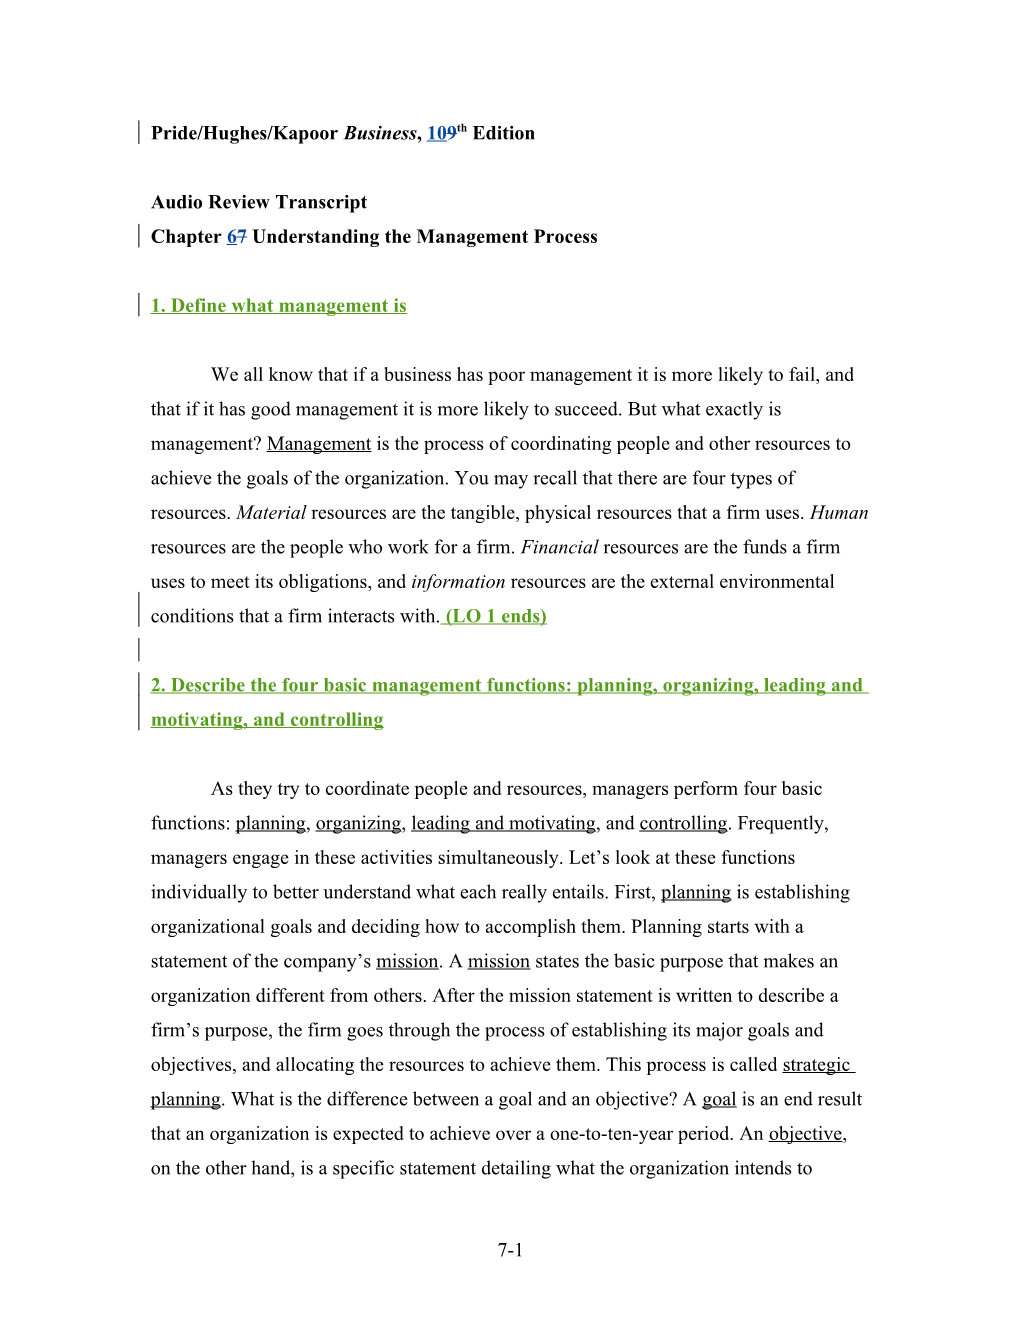 Chapter 7 Understanding the Management Process